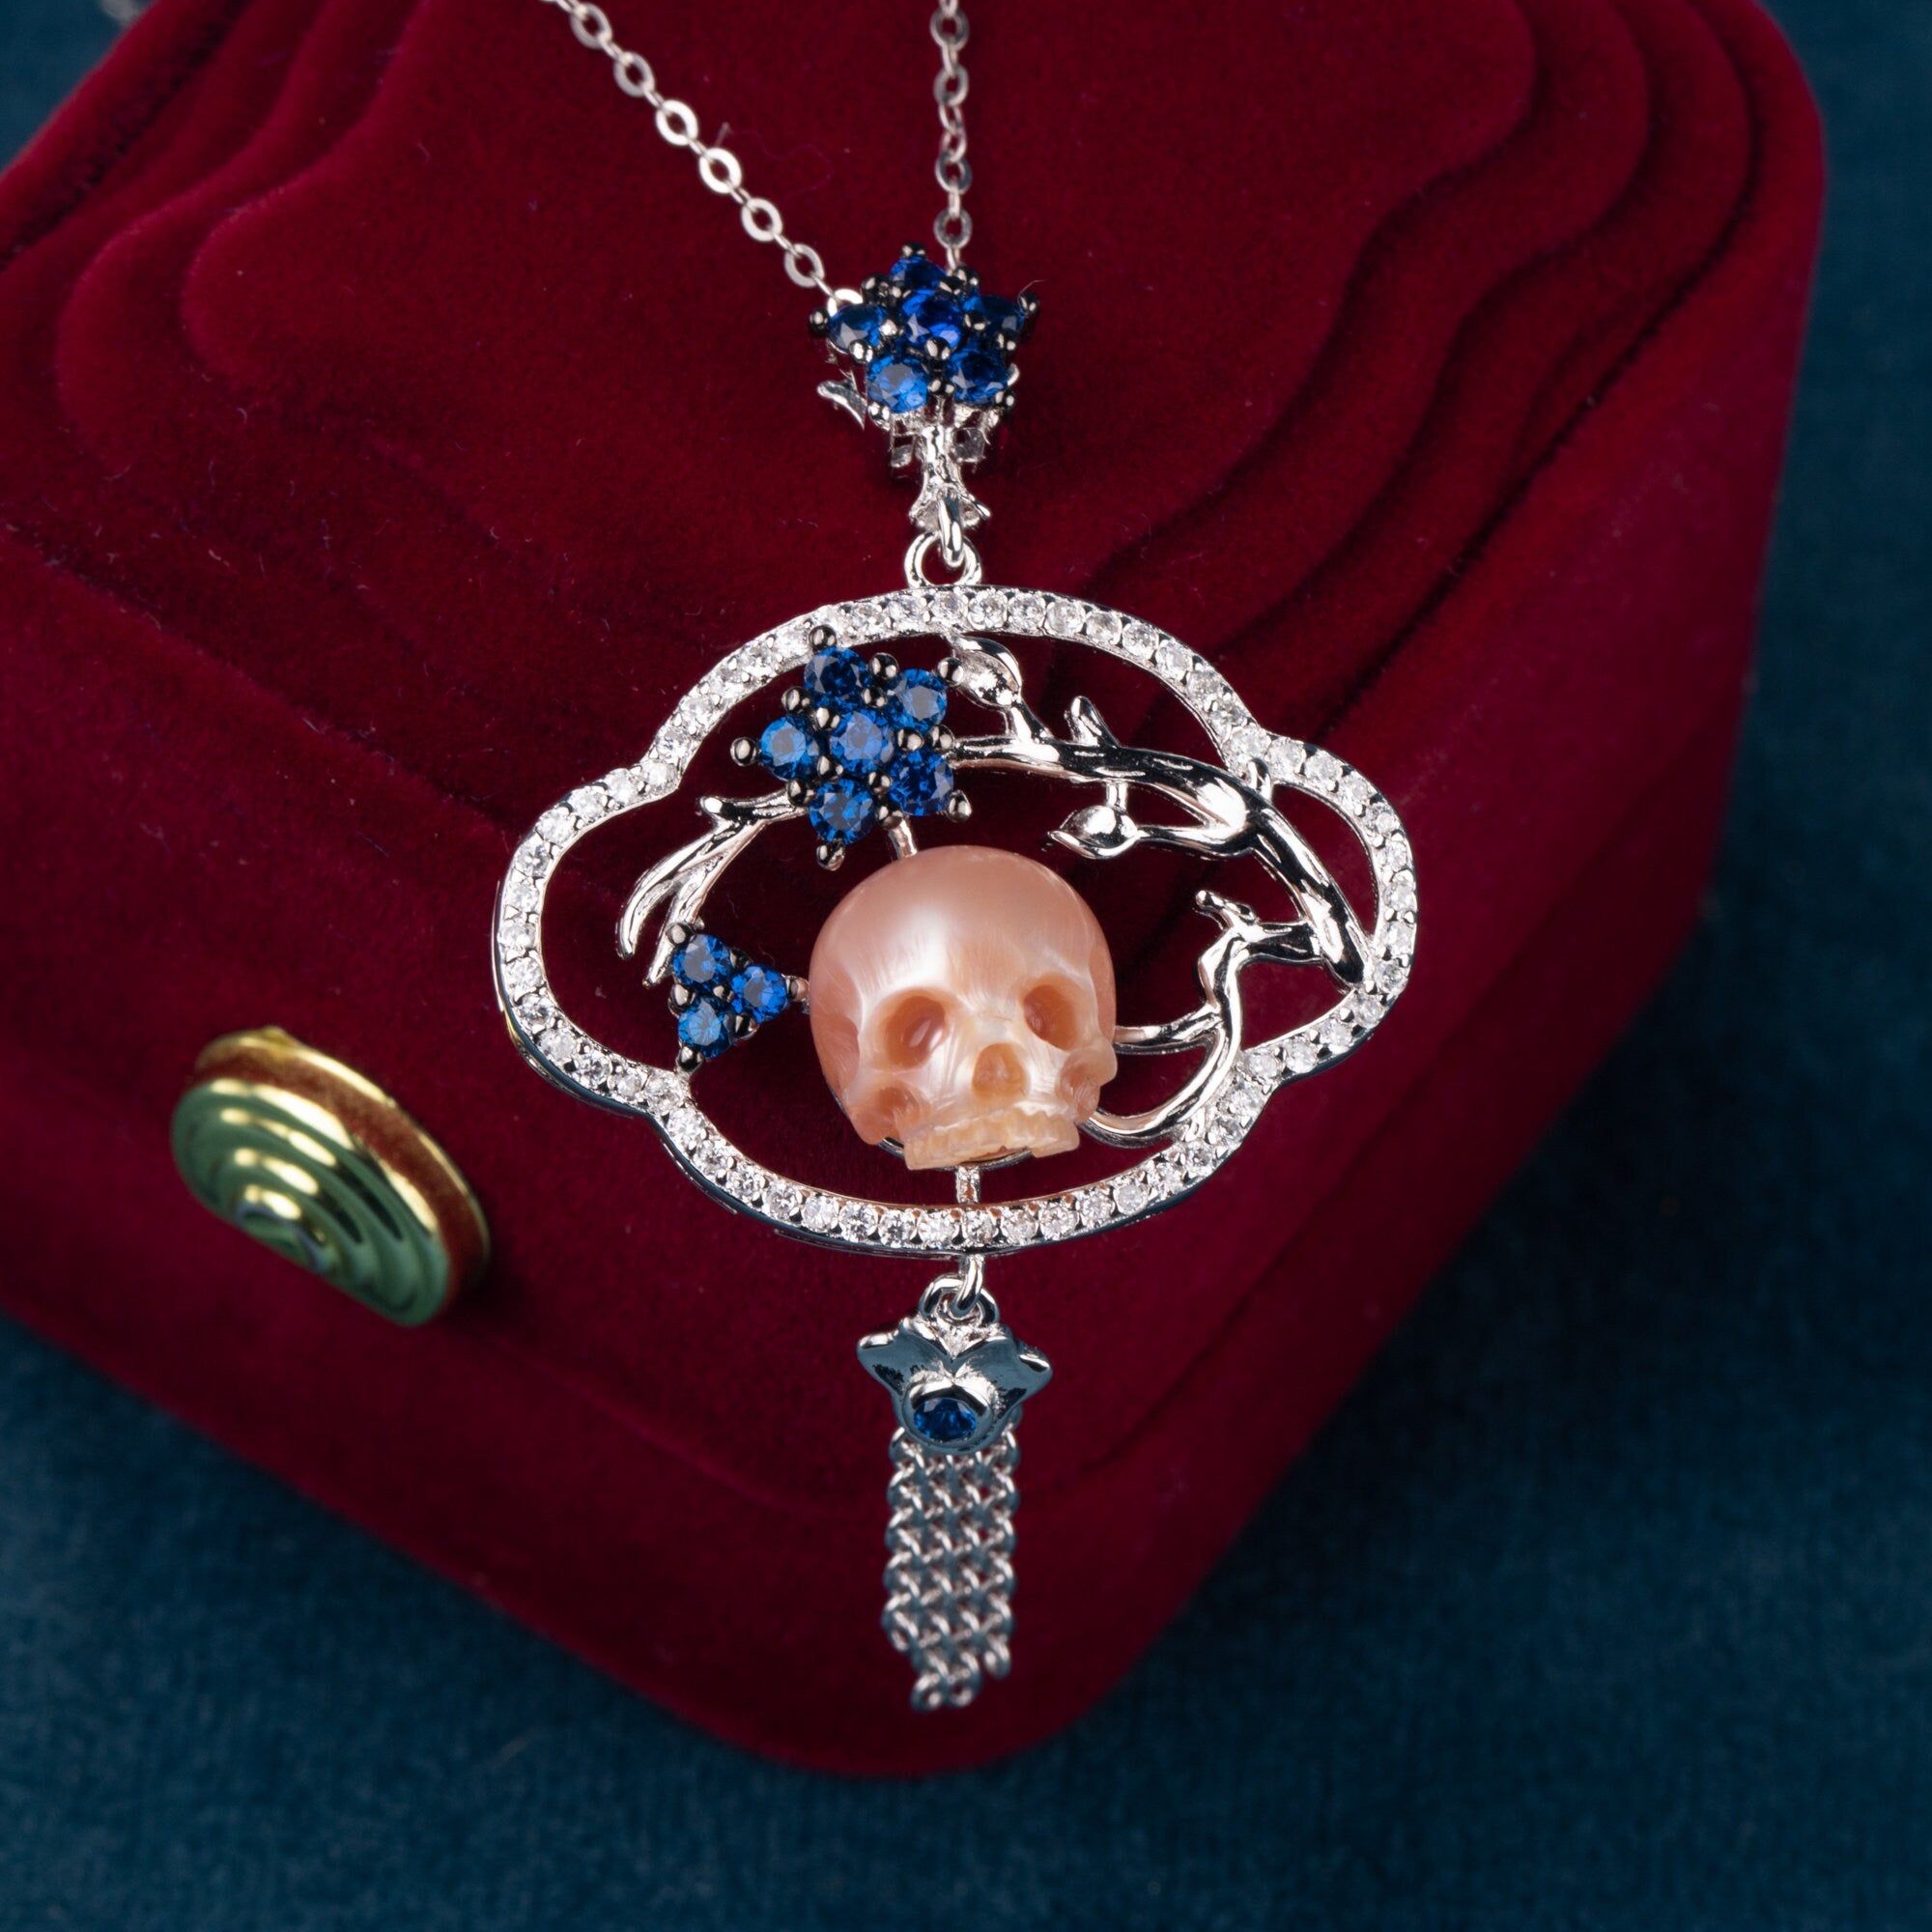 Secret Garden Necklace skull carved pearl S925 silver necklace